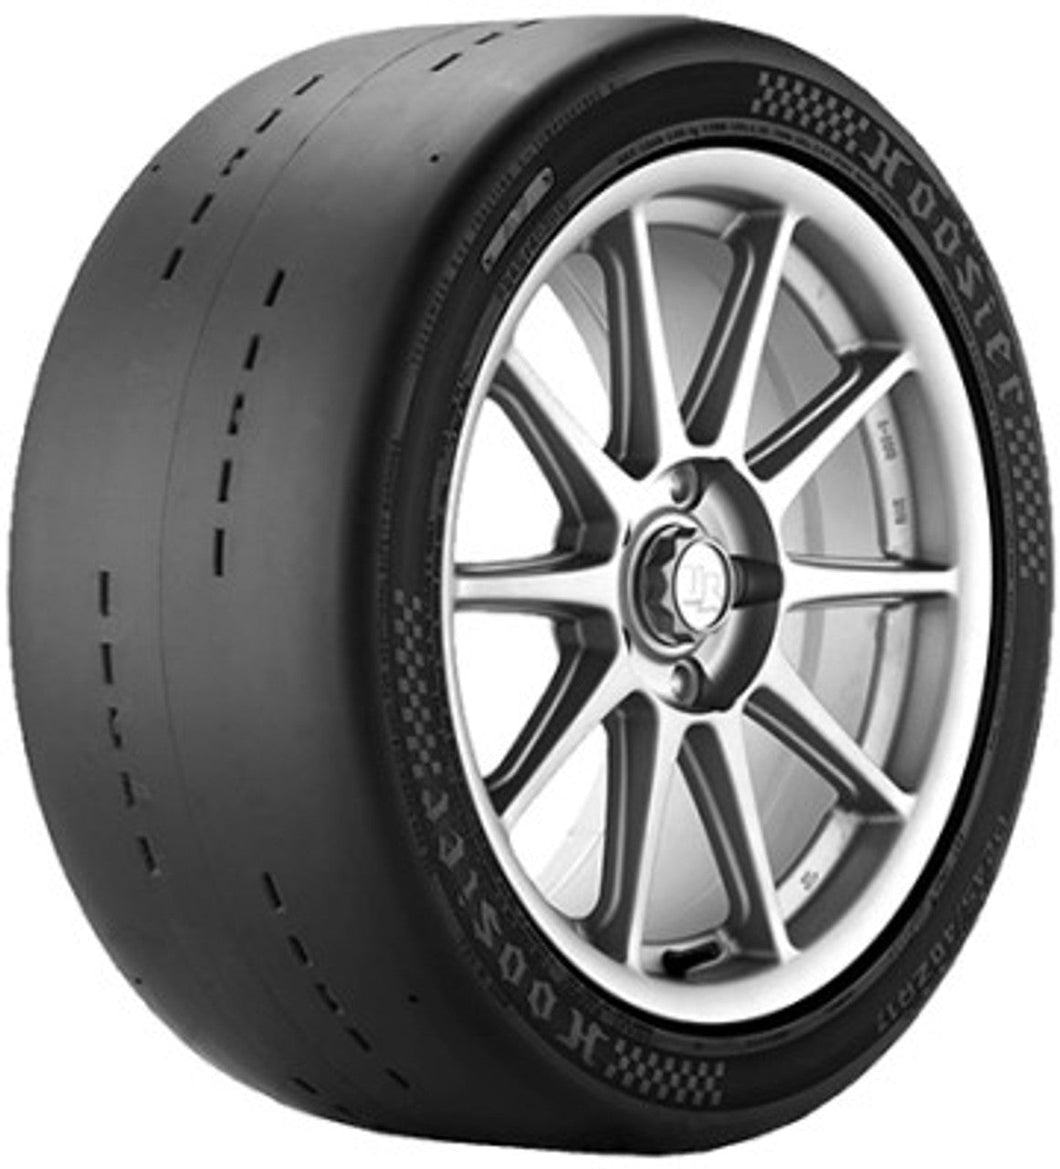 295/30 ZR19 Hoosier Tire Slick D.O.T Neumático